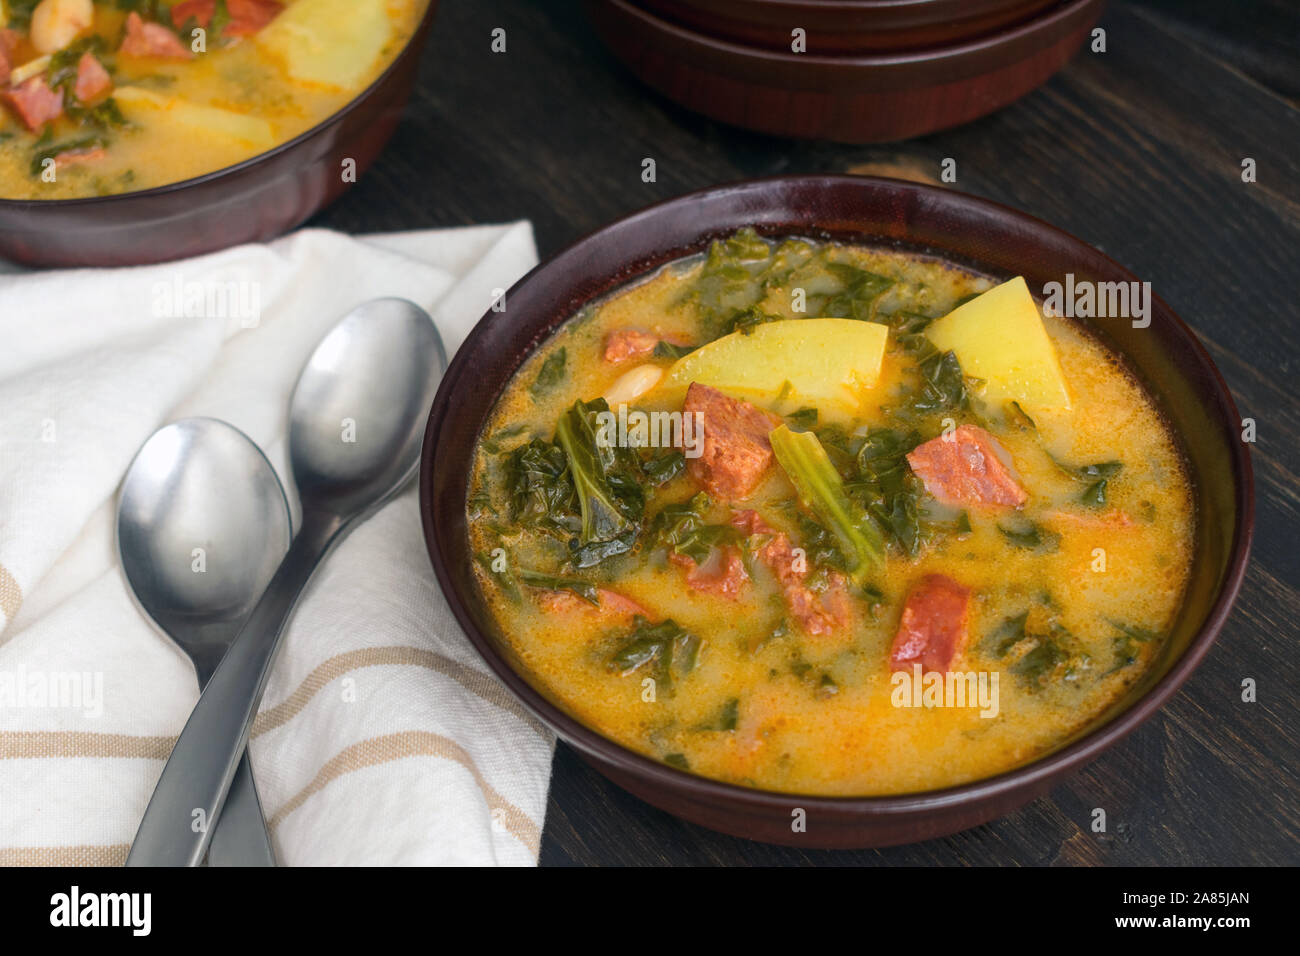 Portuguese Caldo Verde Soup: Bowls of traditional Portuguese sausage, potato, and kale soup on a dark wood background Stock Photo